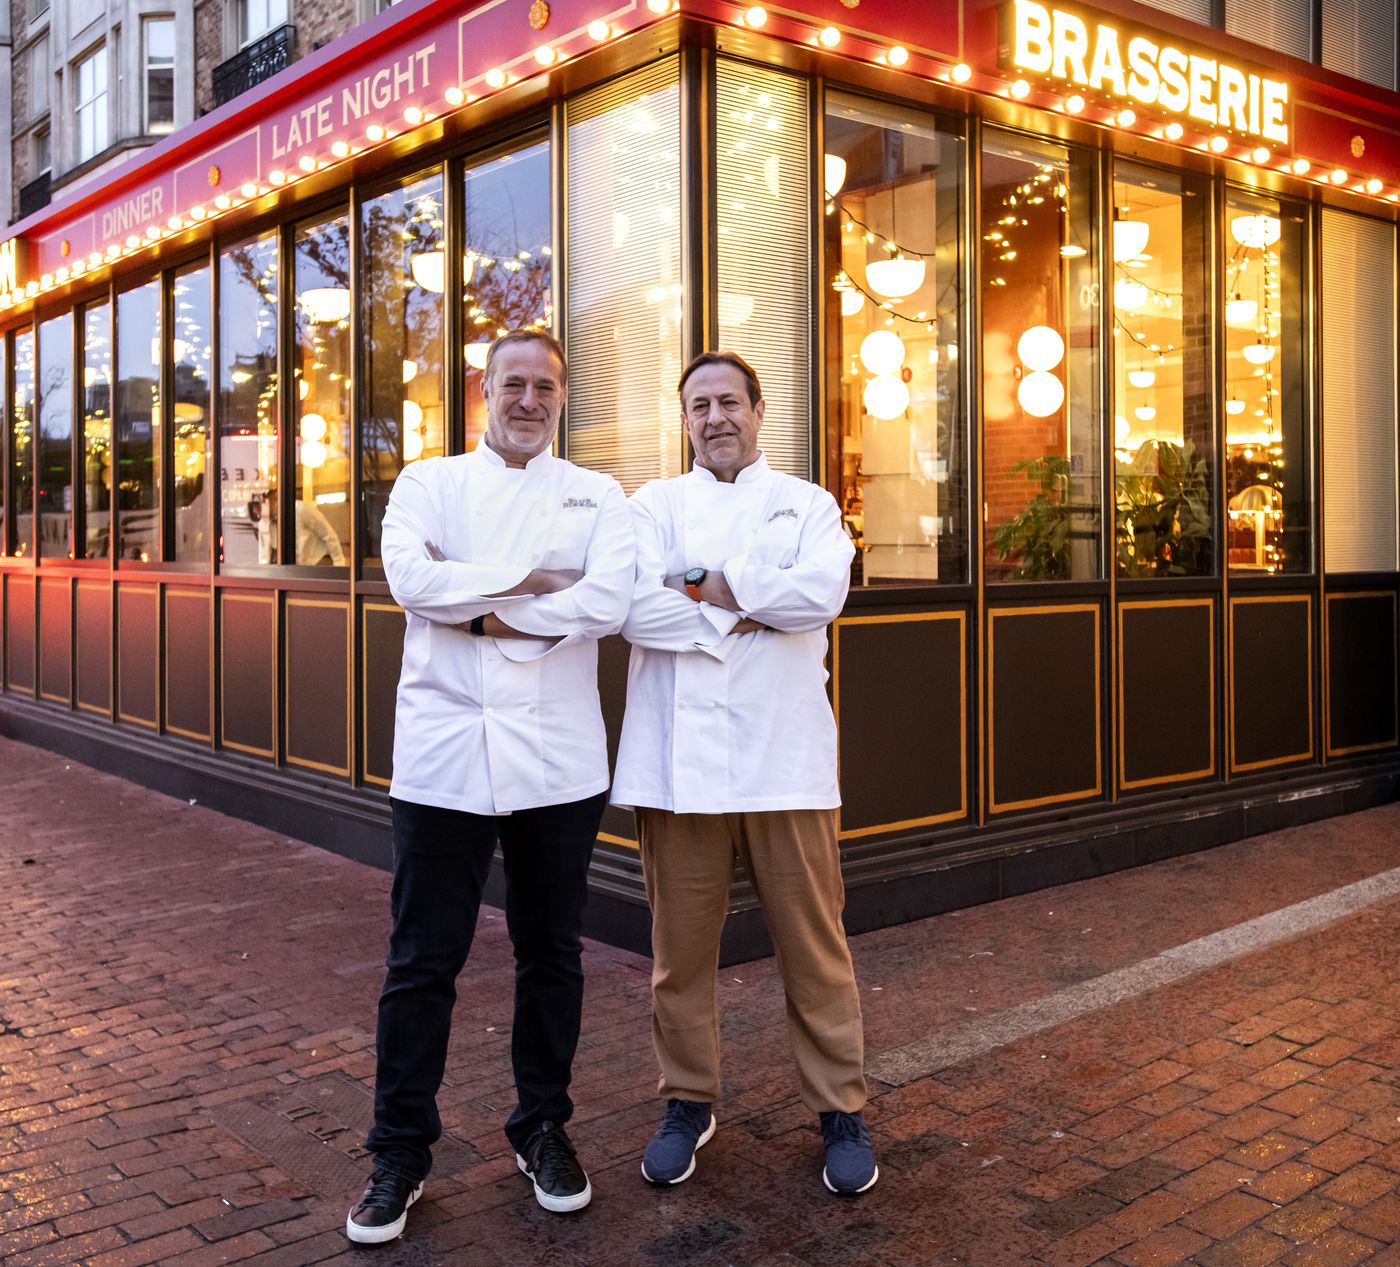 New York City’s Blue Ribbon Brasserie Makes Its Boston Debut